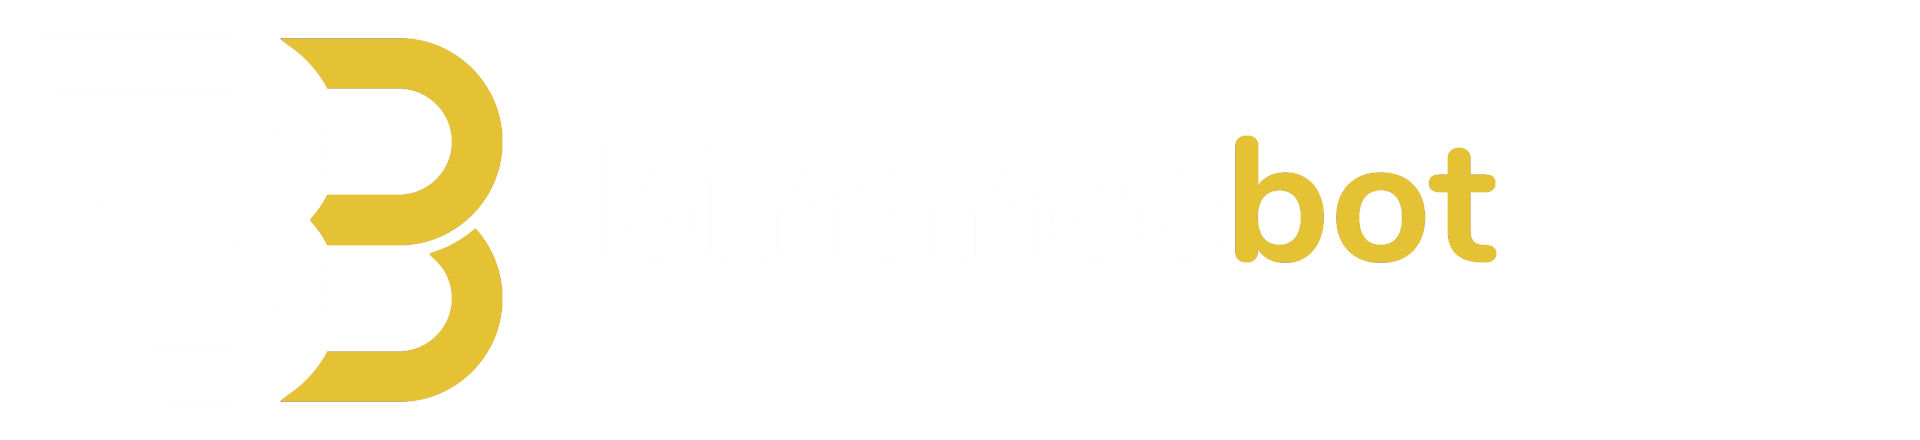 logo binancebot.com